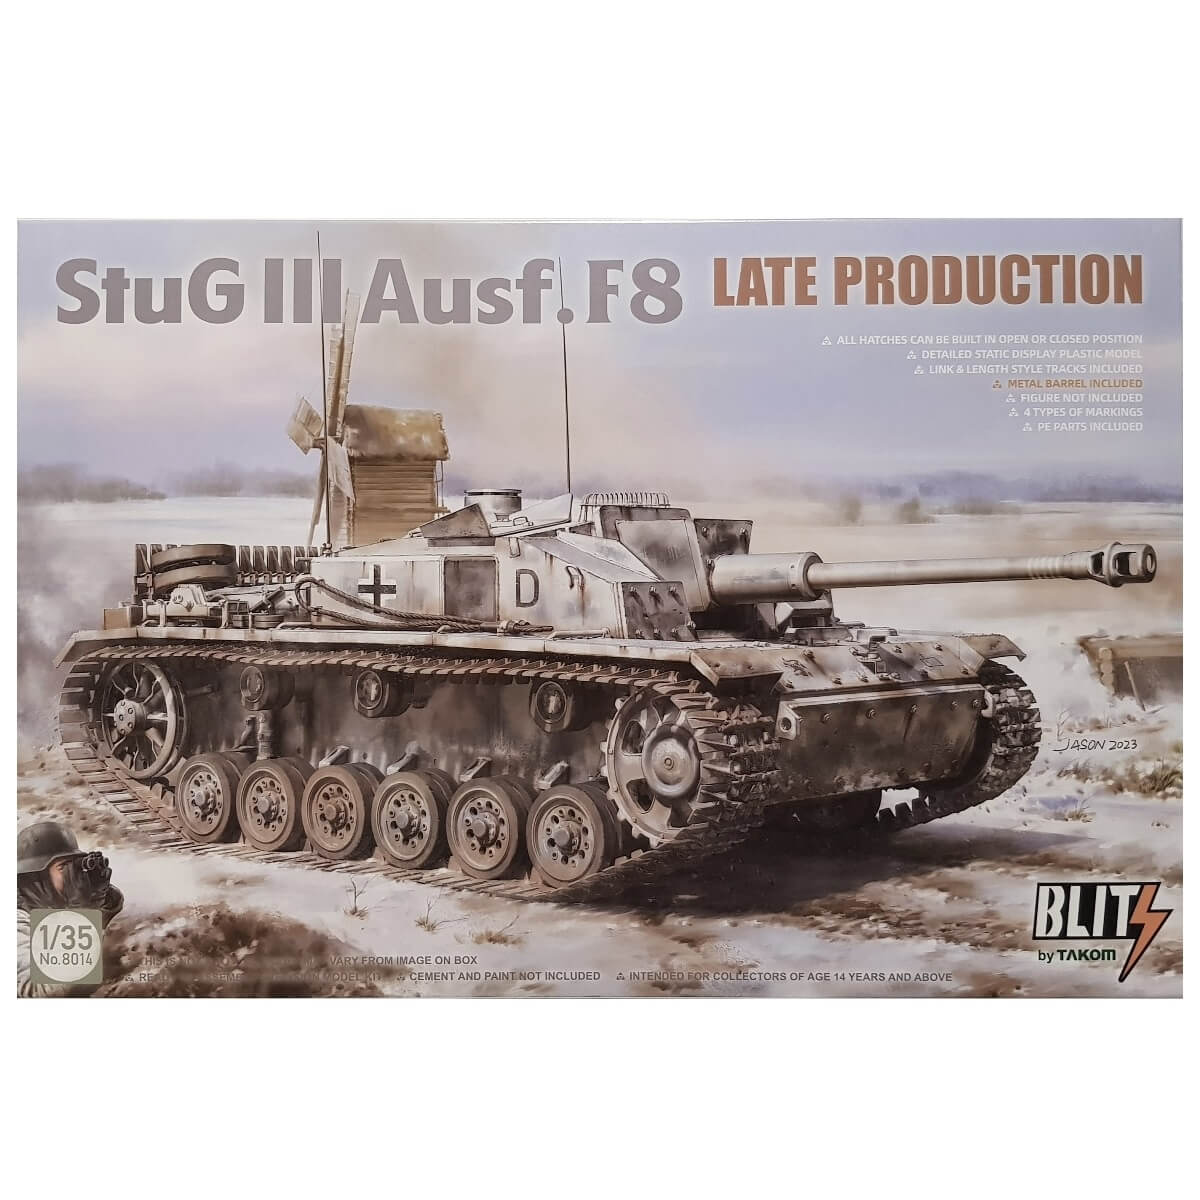 1:35 Stug III Ausf. F8 - Late Production - TAKOM